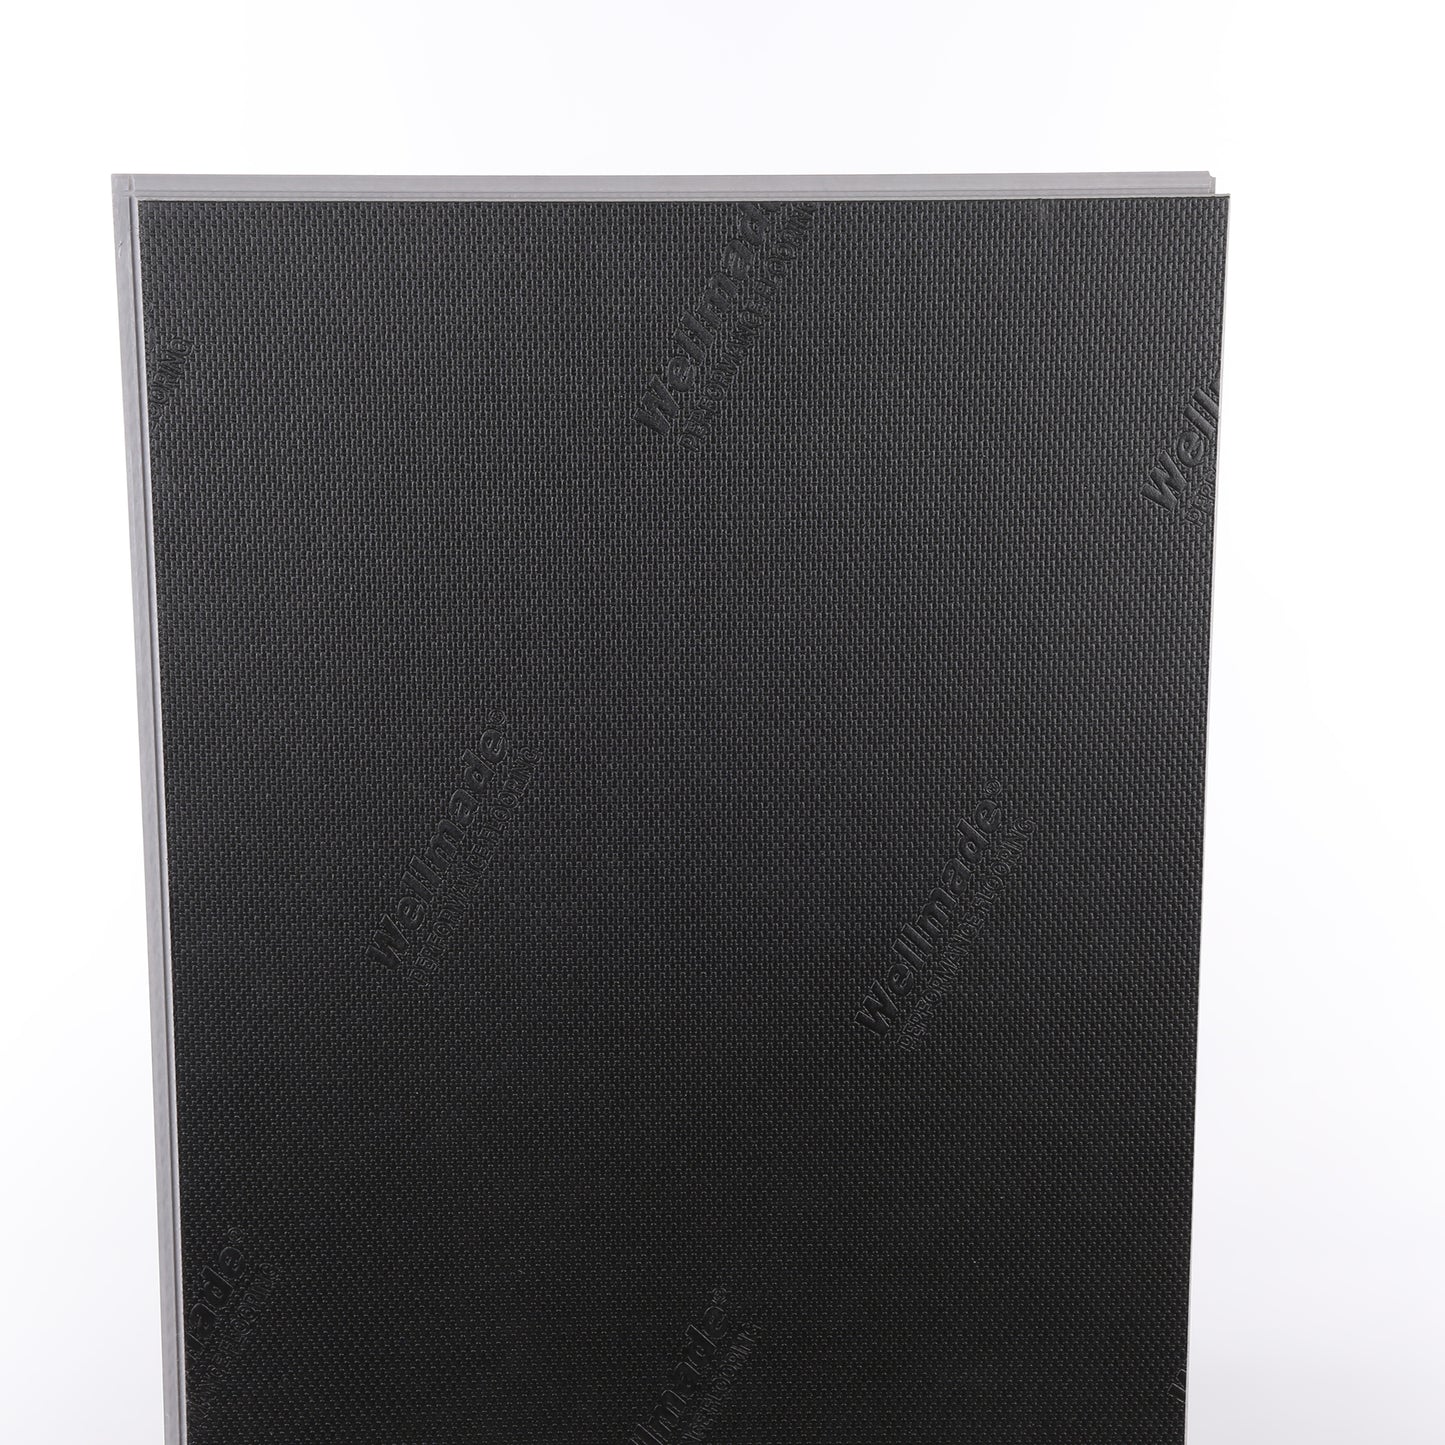 6mm Venice HDPC® Waterproof Luxury Vinyl Tile Flooring 12 in. Wide x 24 in. Long